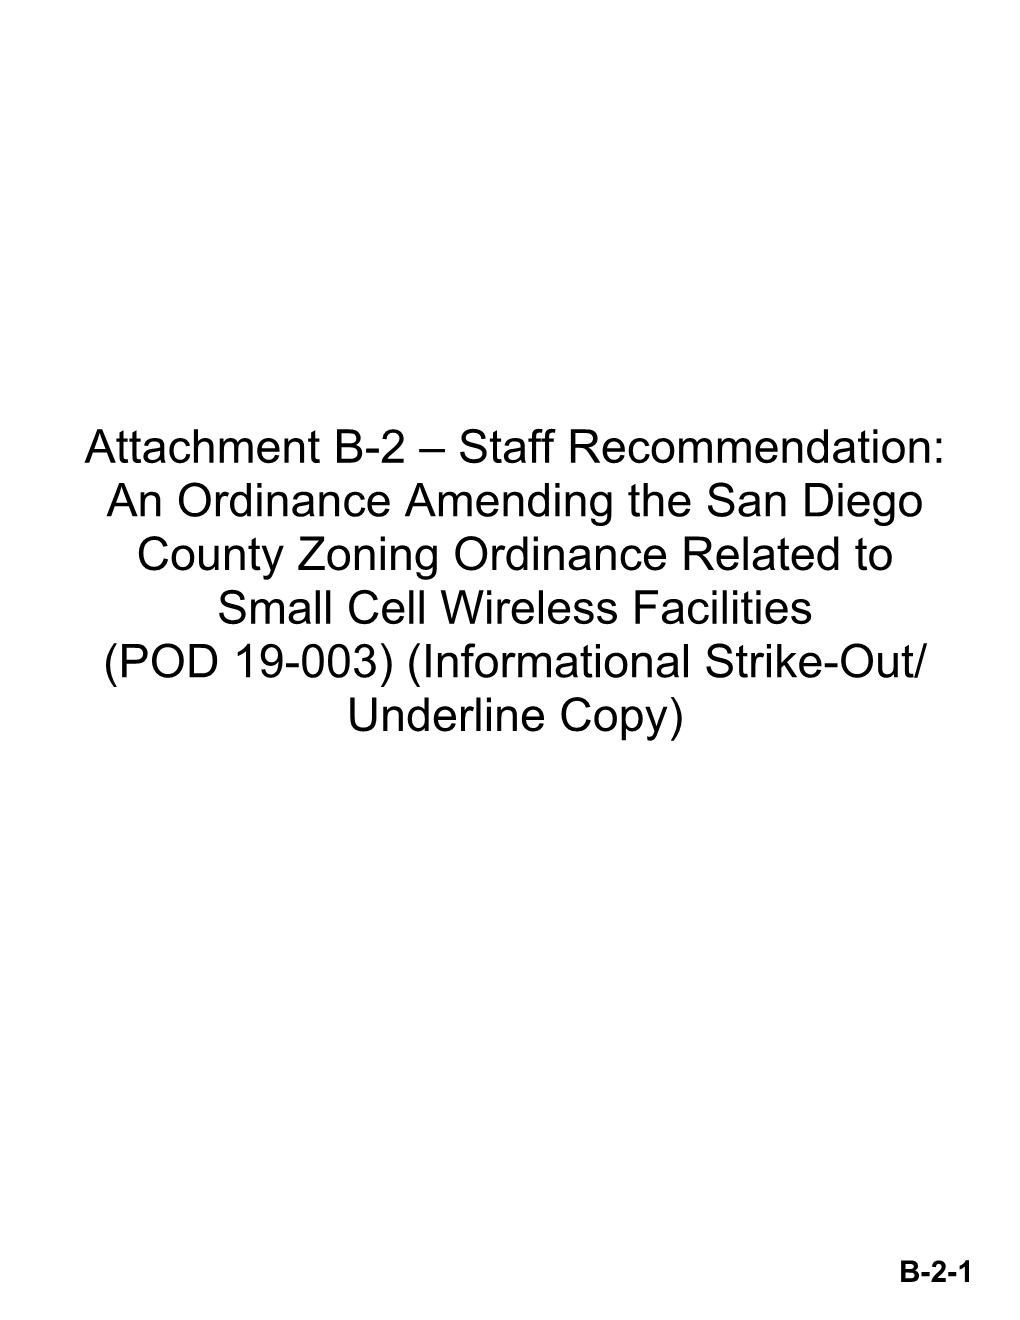 Attachment B-2 – Staff Recommendation: an Ordinance Amending